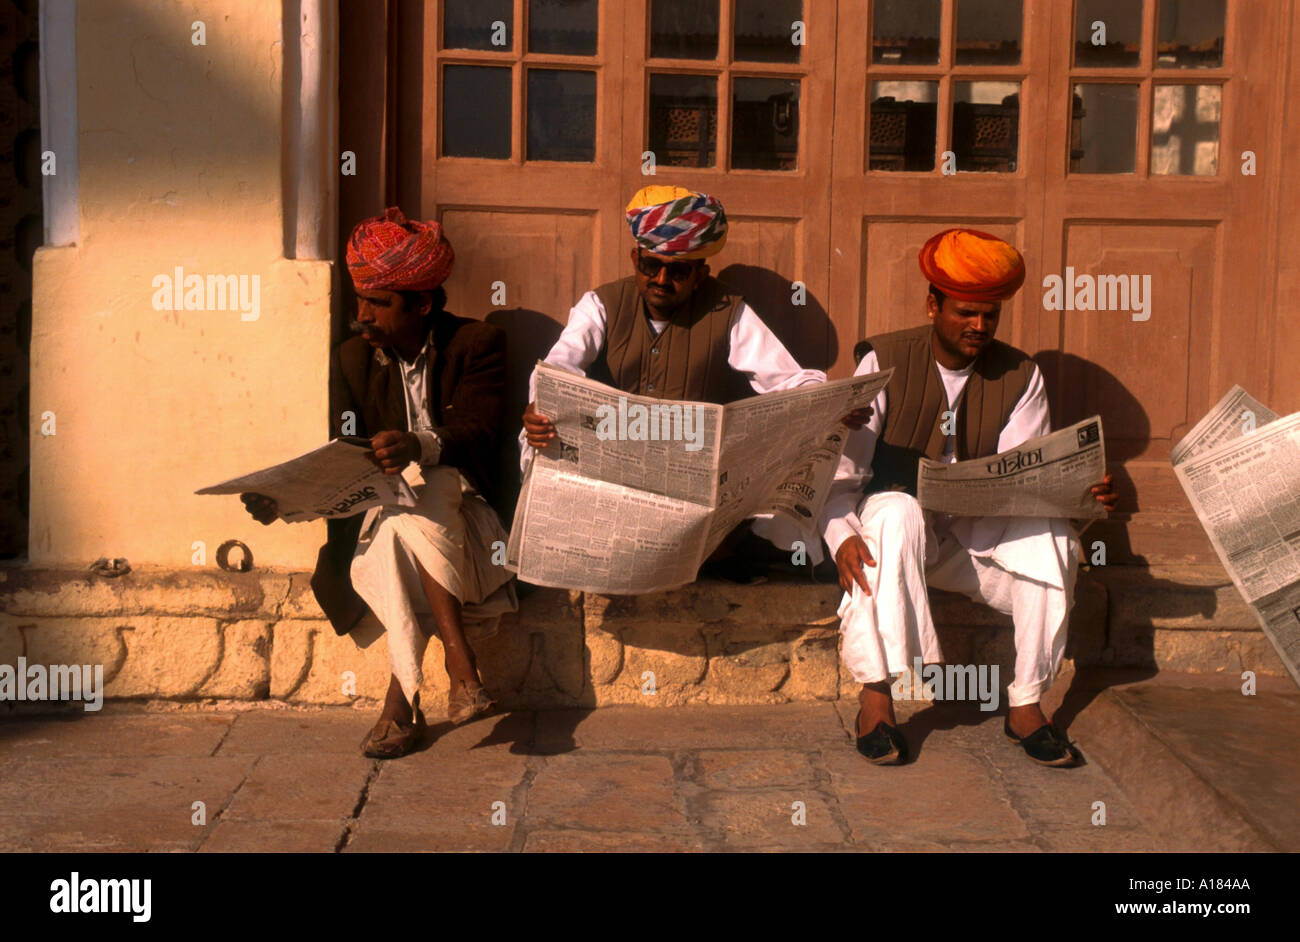 Group of men sitting reading newspapers Jodhpur Rajasthan India Robert Harding Stock Photo